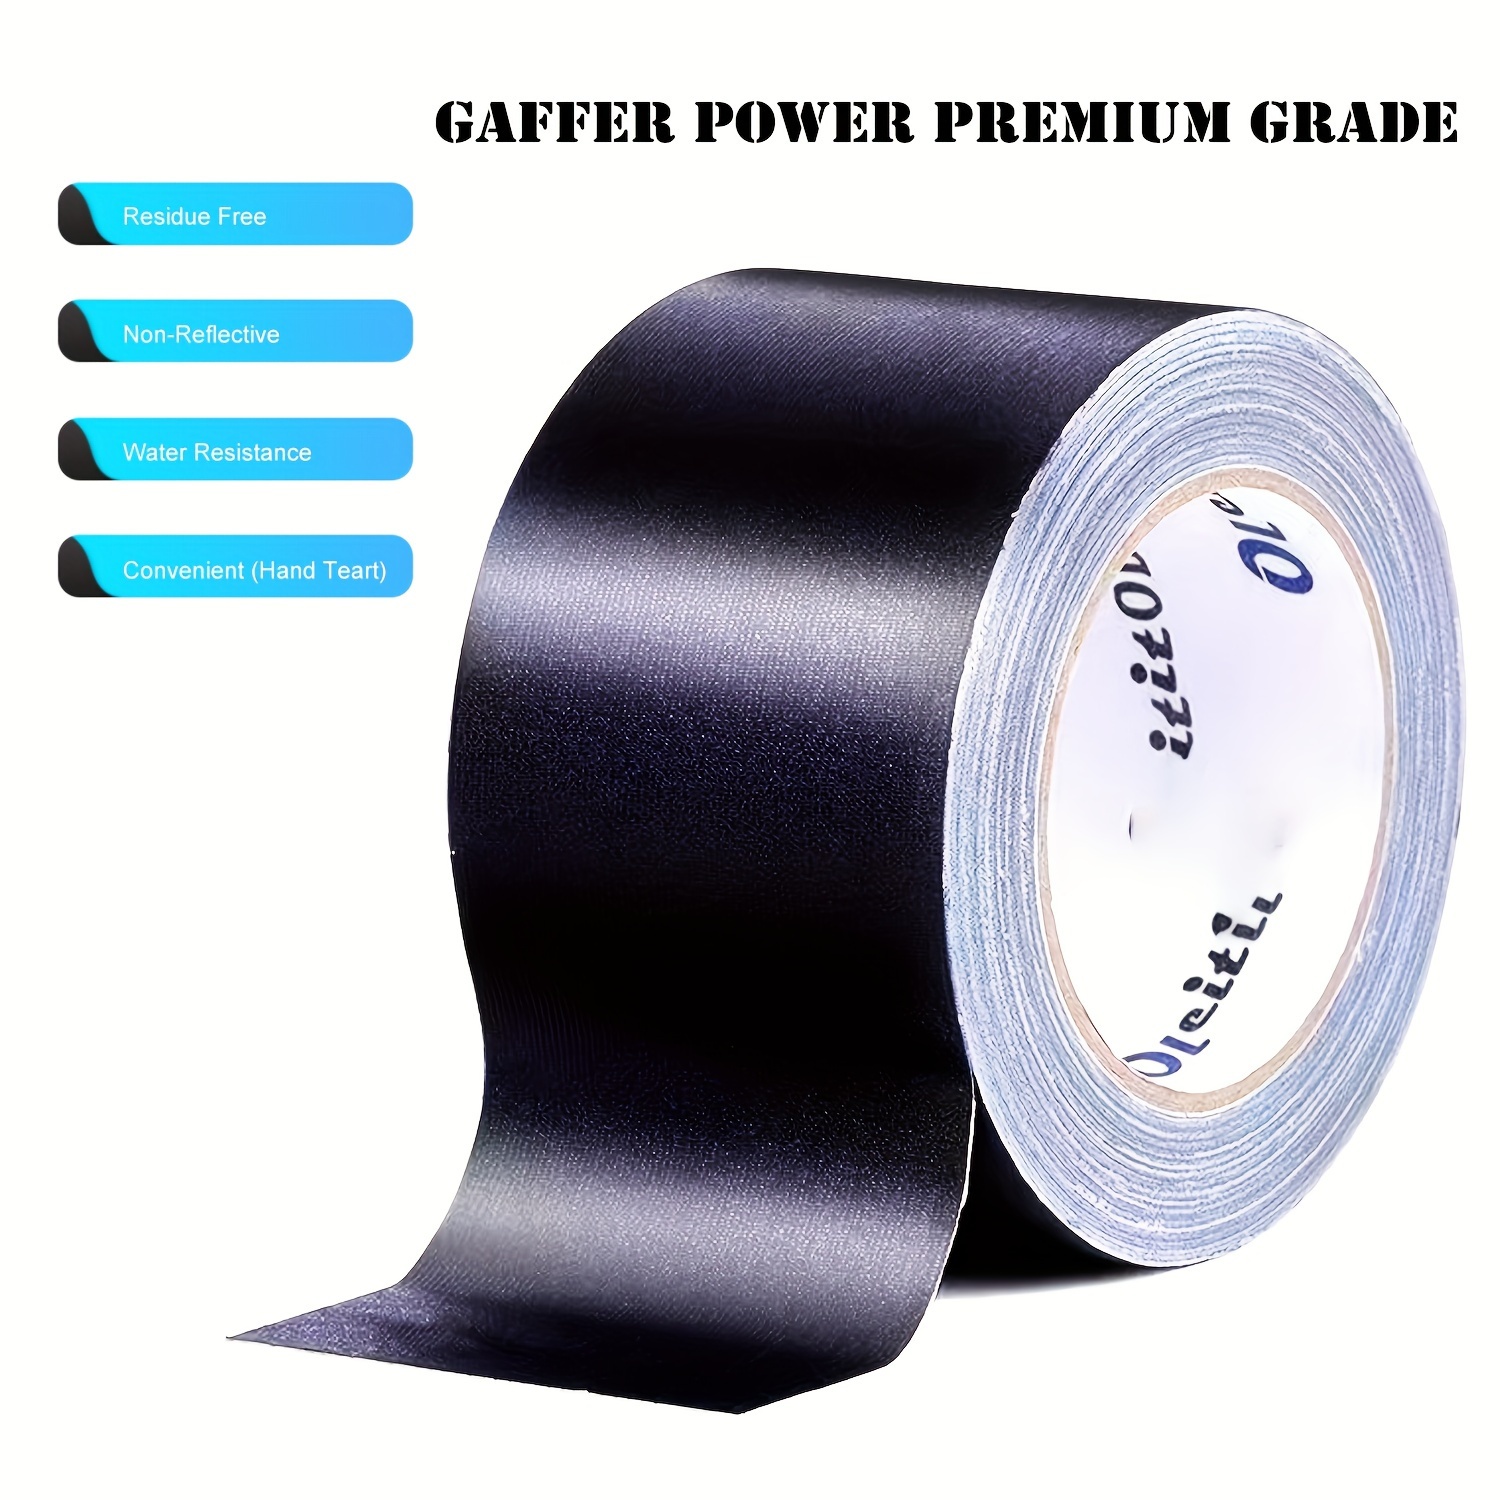 Premium Grade Professional Gaffer Tape and Tools – Gaffer Power